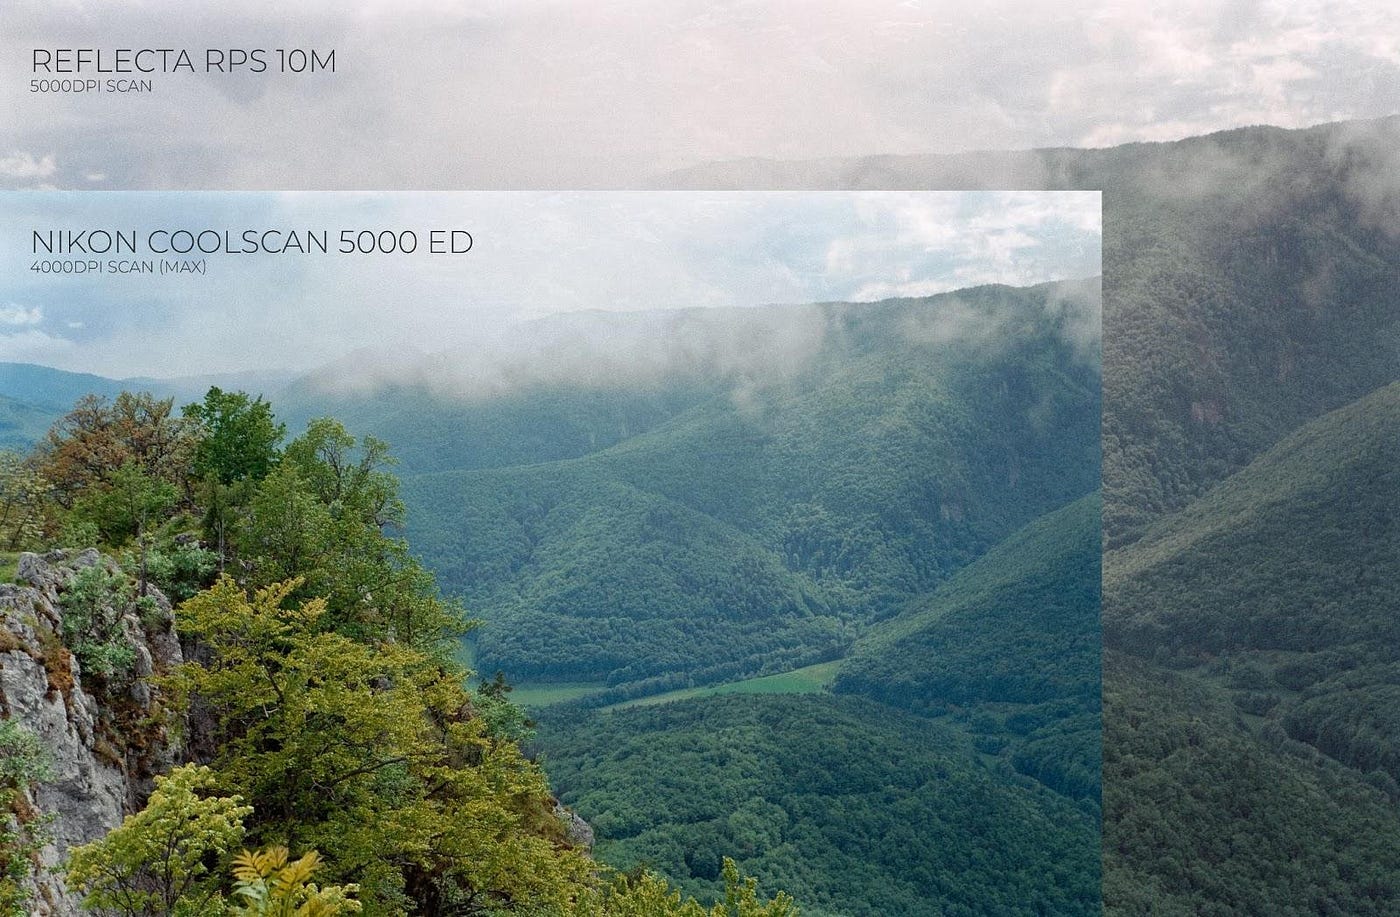 Reflecta RPS 10M vs Nikon Coolscan 5000ED | by Dominik Jursa | Medium